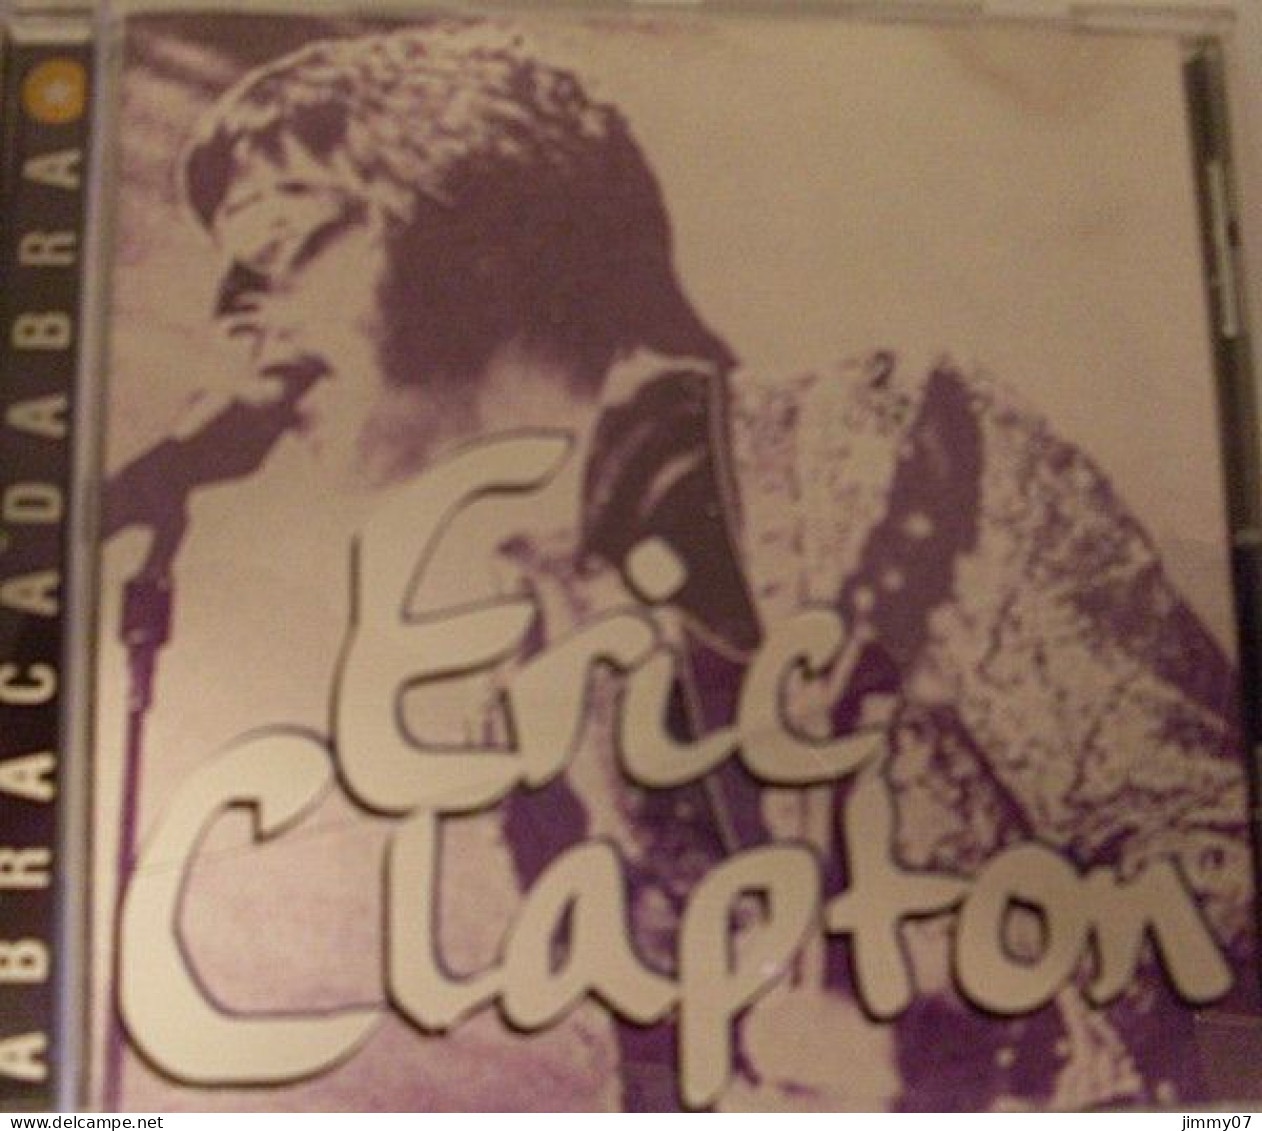 Eric Clapton - Eric Clapton (CD, Comp) - Rock